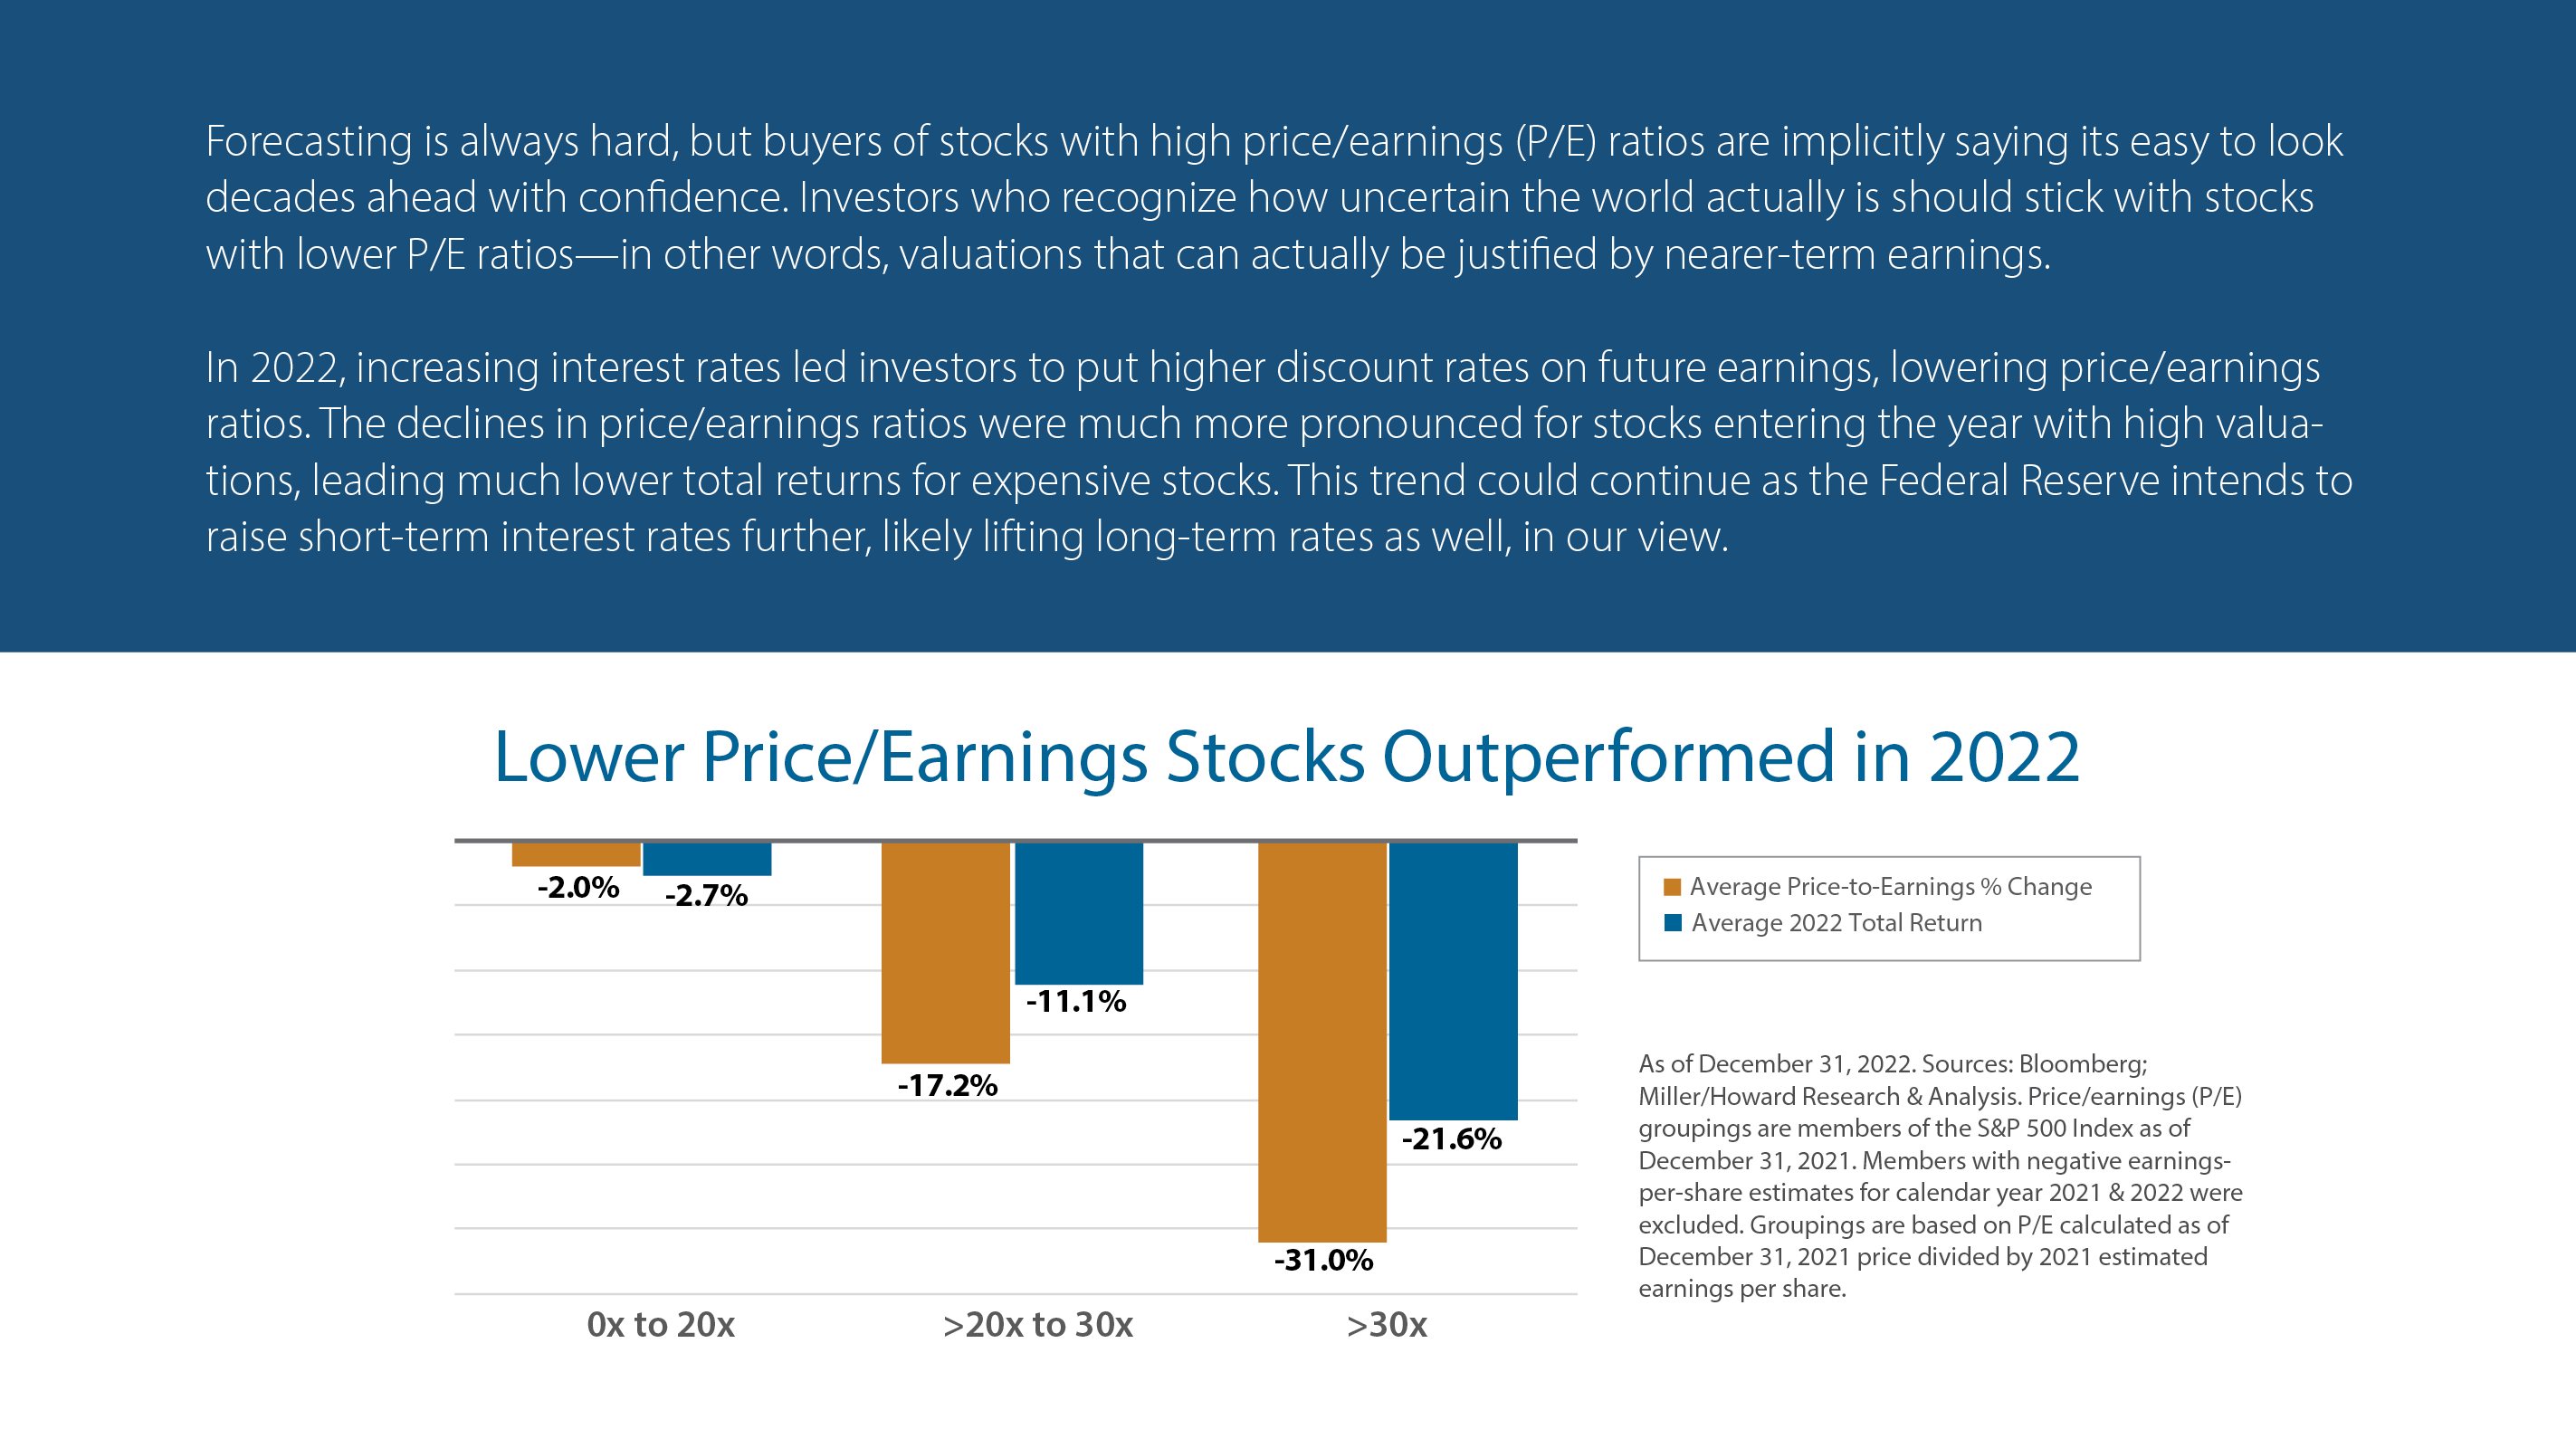 Lower Price/Earnings Stocks Outperformed in 2022